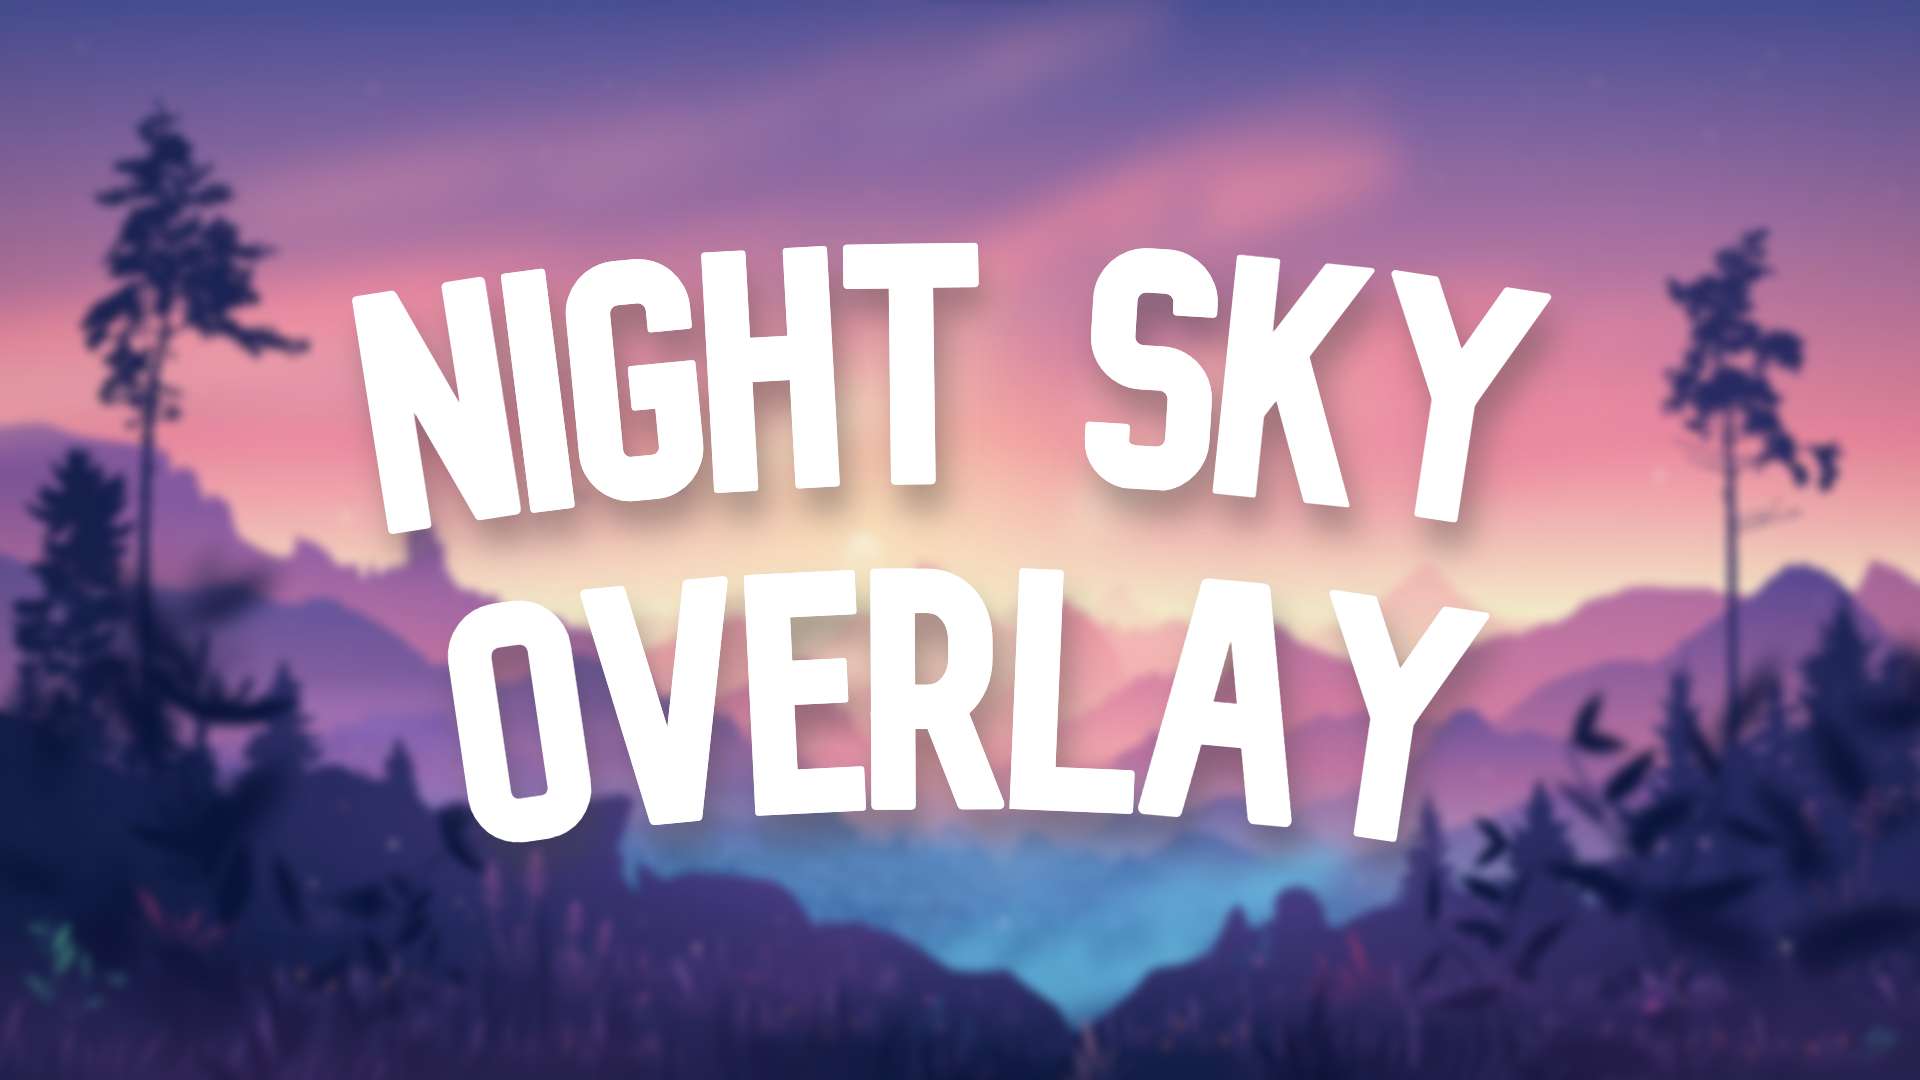 Night Sky Overlay #1 16x by rh56 on PvPRP